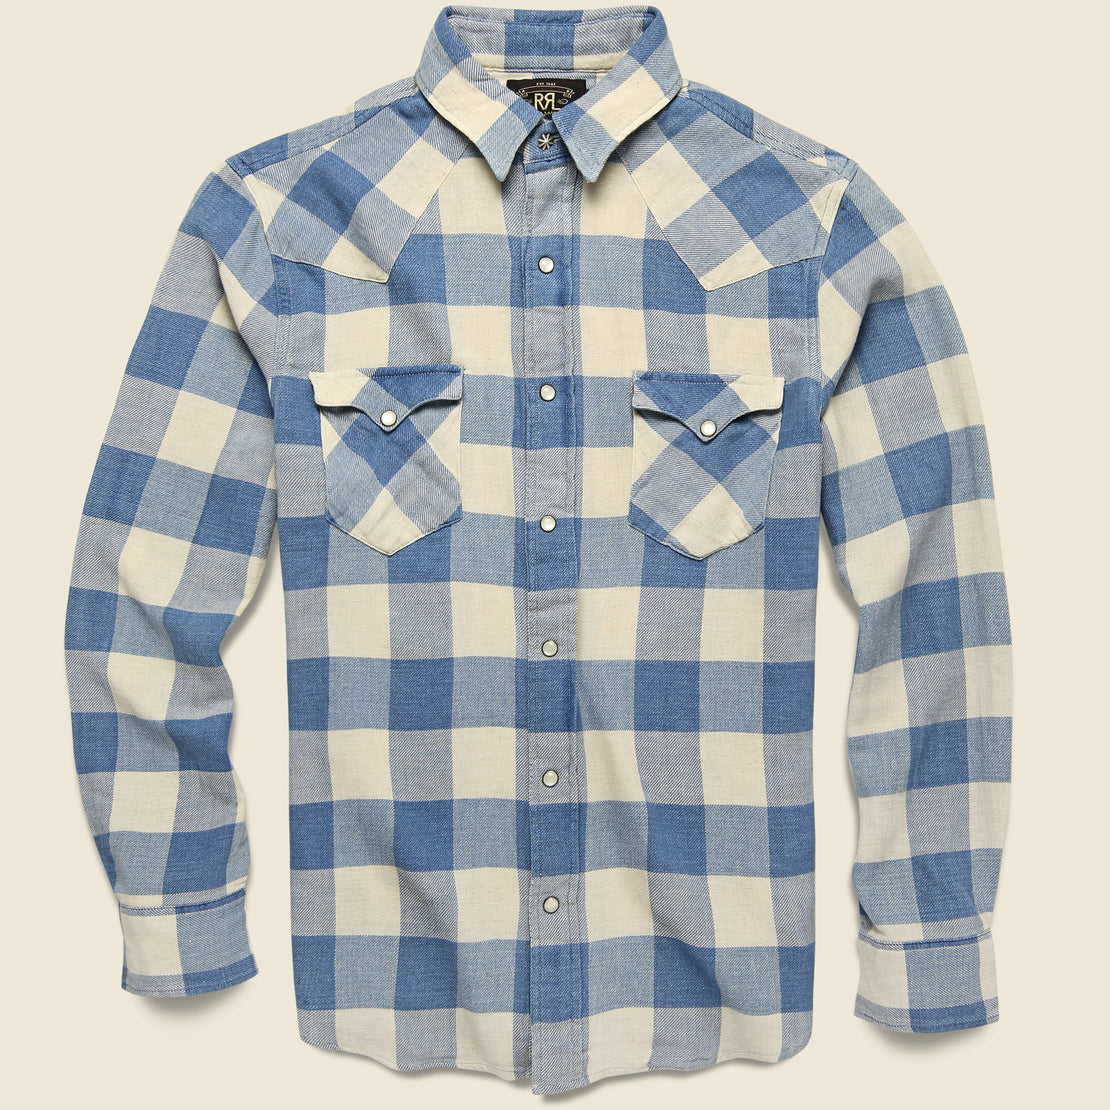 RRL Buffalo Western Shirt - Indigo/Cream